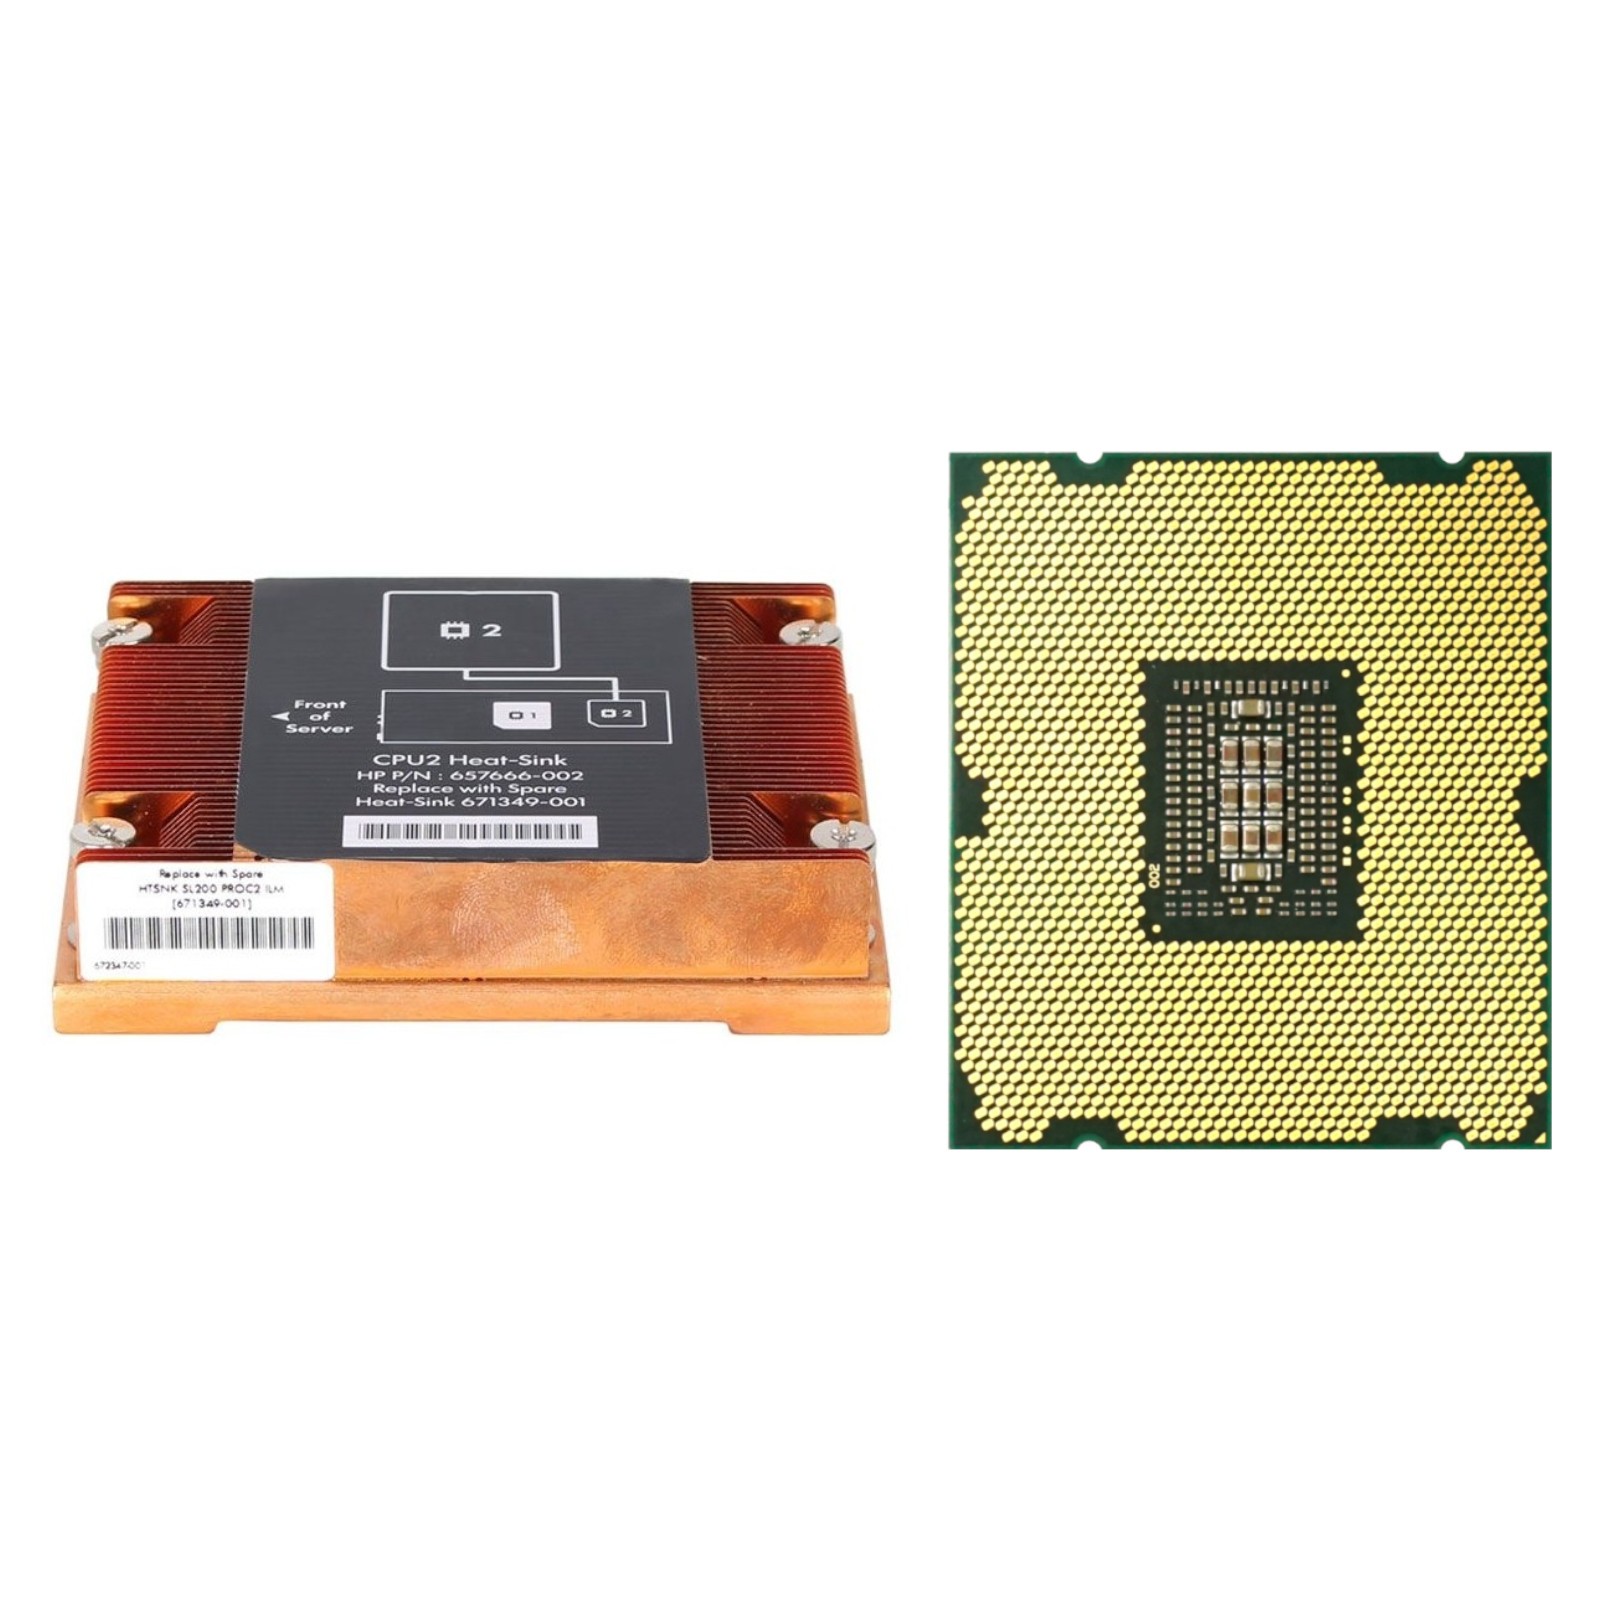 HP (654424-B21) ProLiant SL230S G8 - Intel Xeon E5-2603 CPU2 Kit